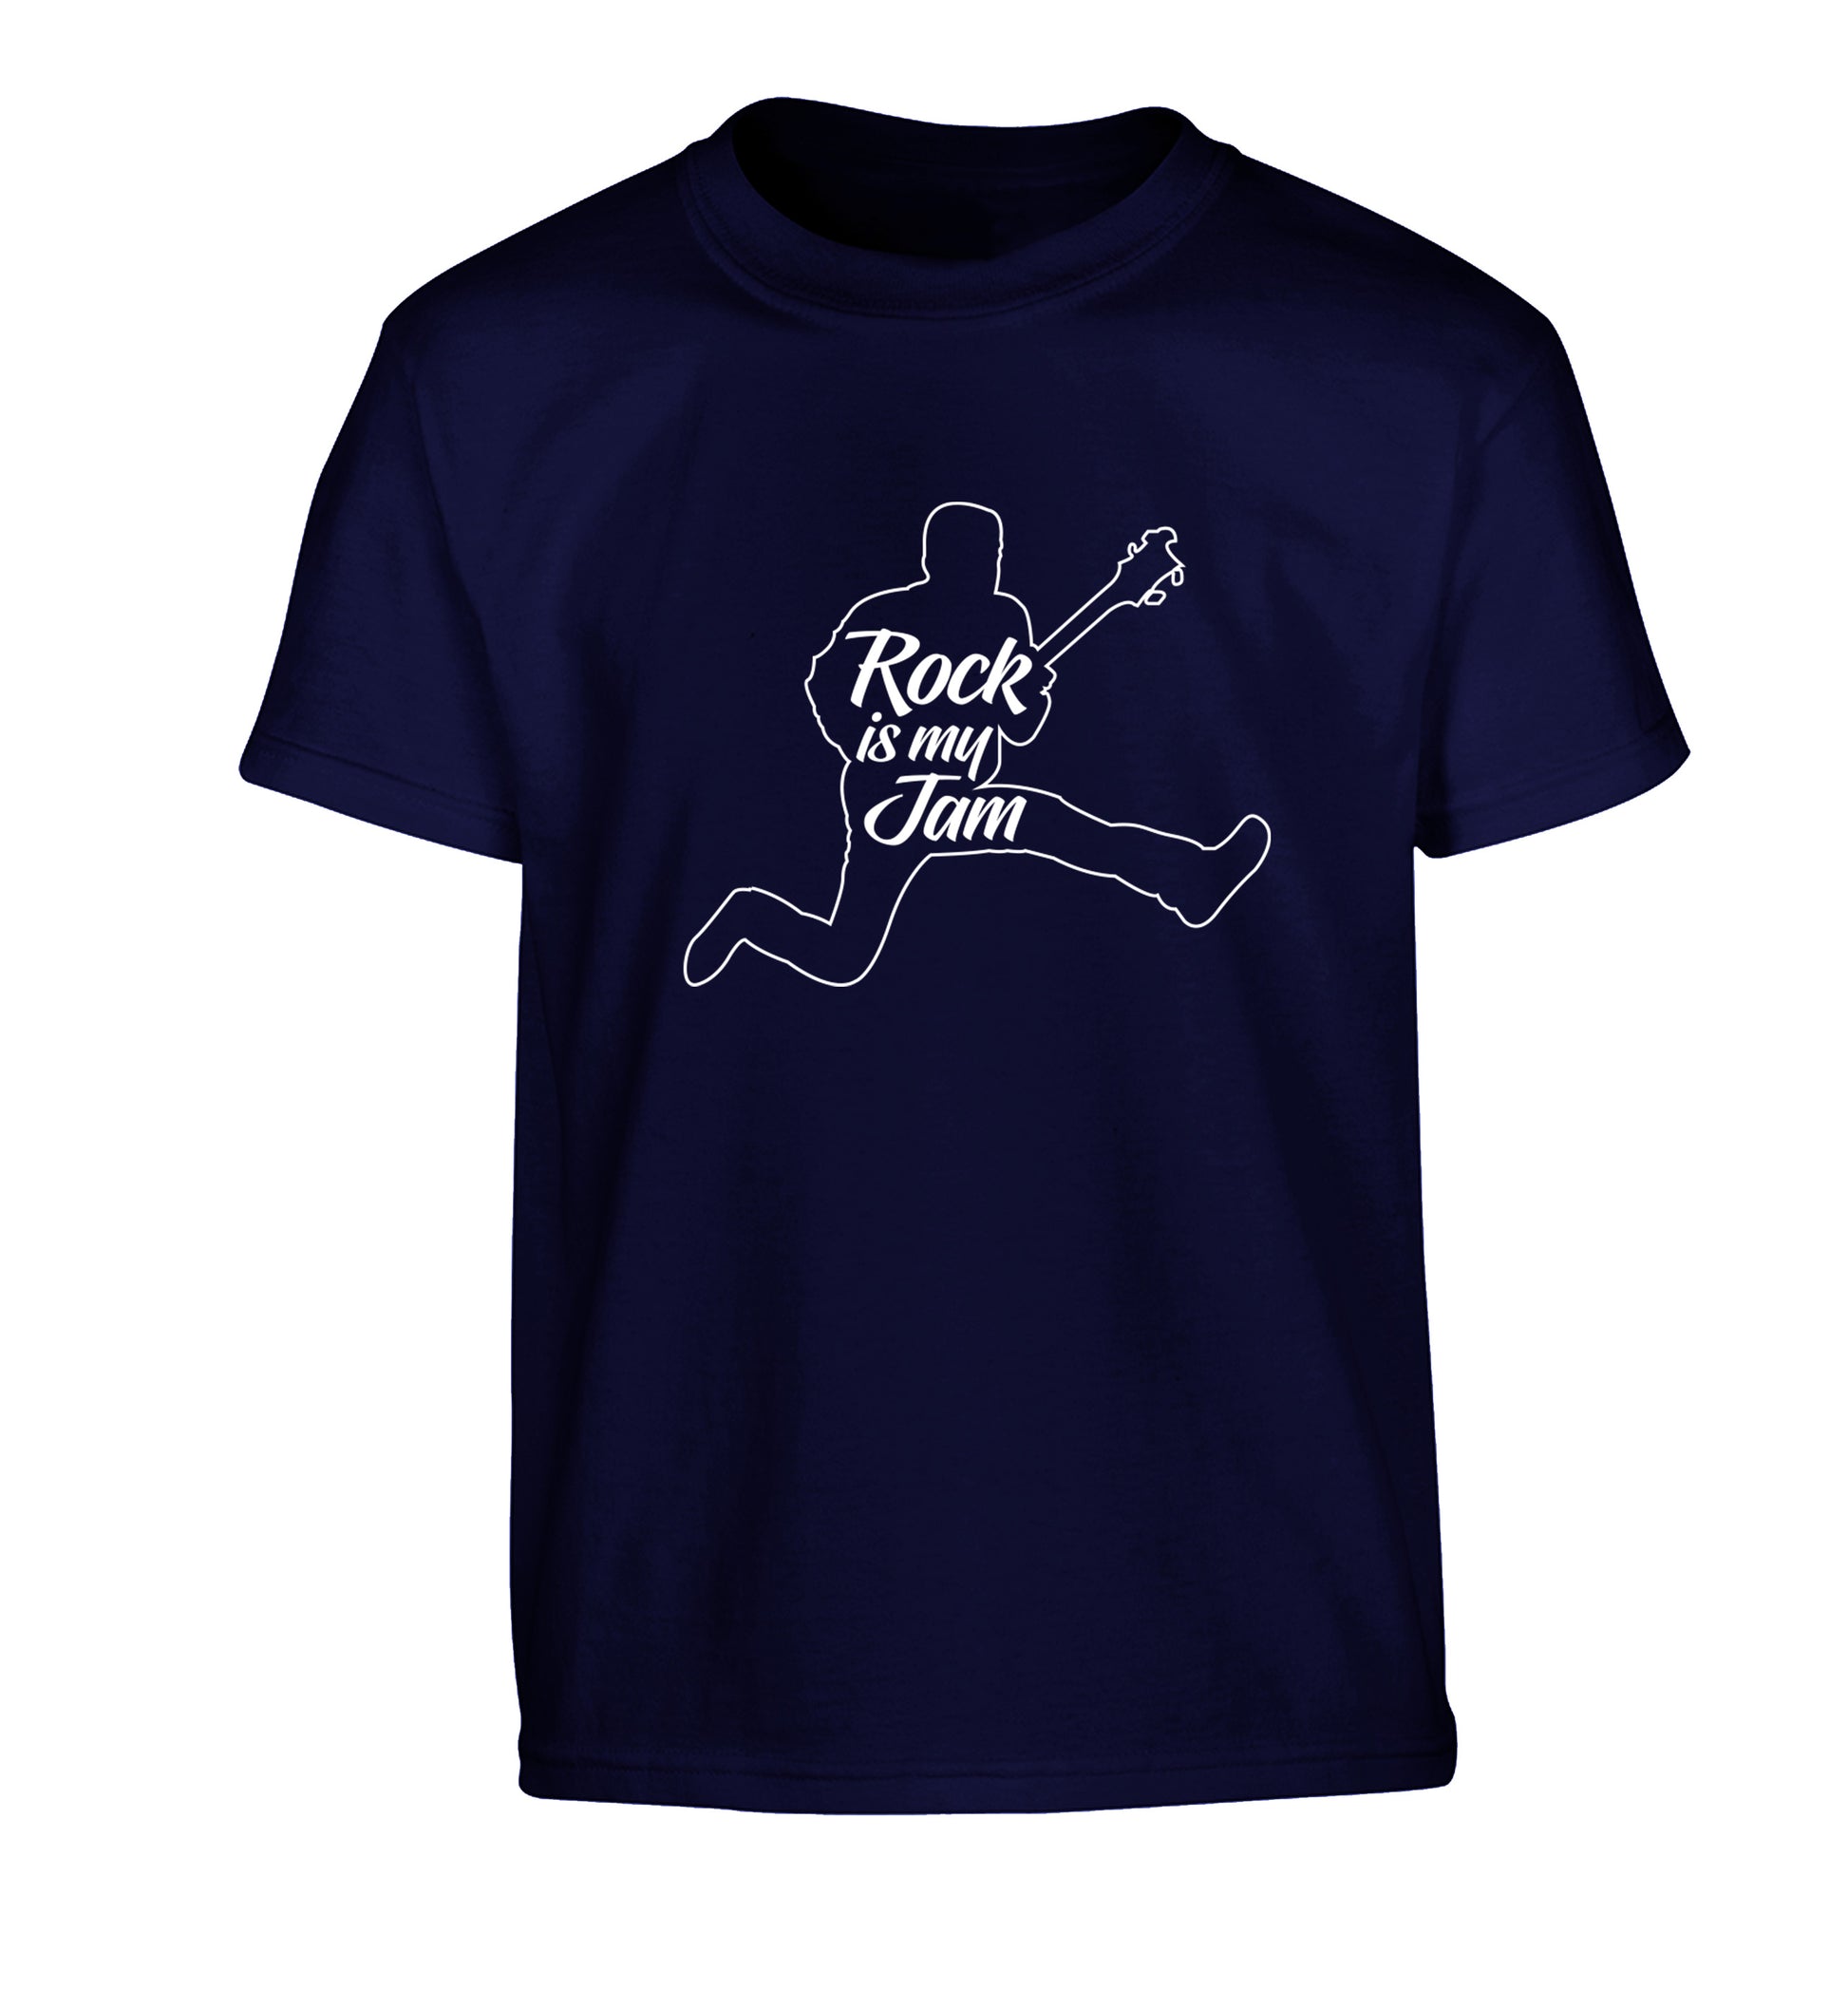 Rock is my jam Children's navy Tshirt 12-13 Years